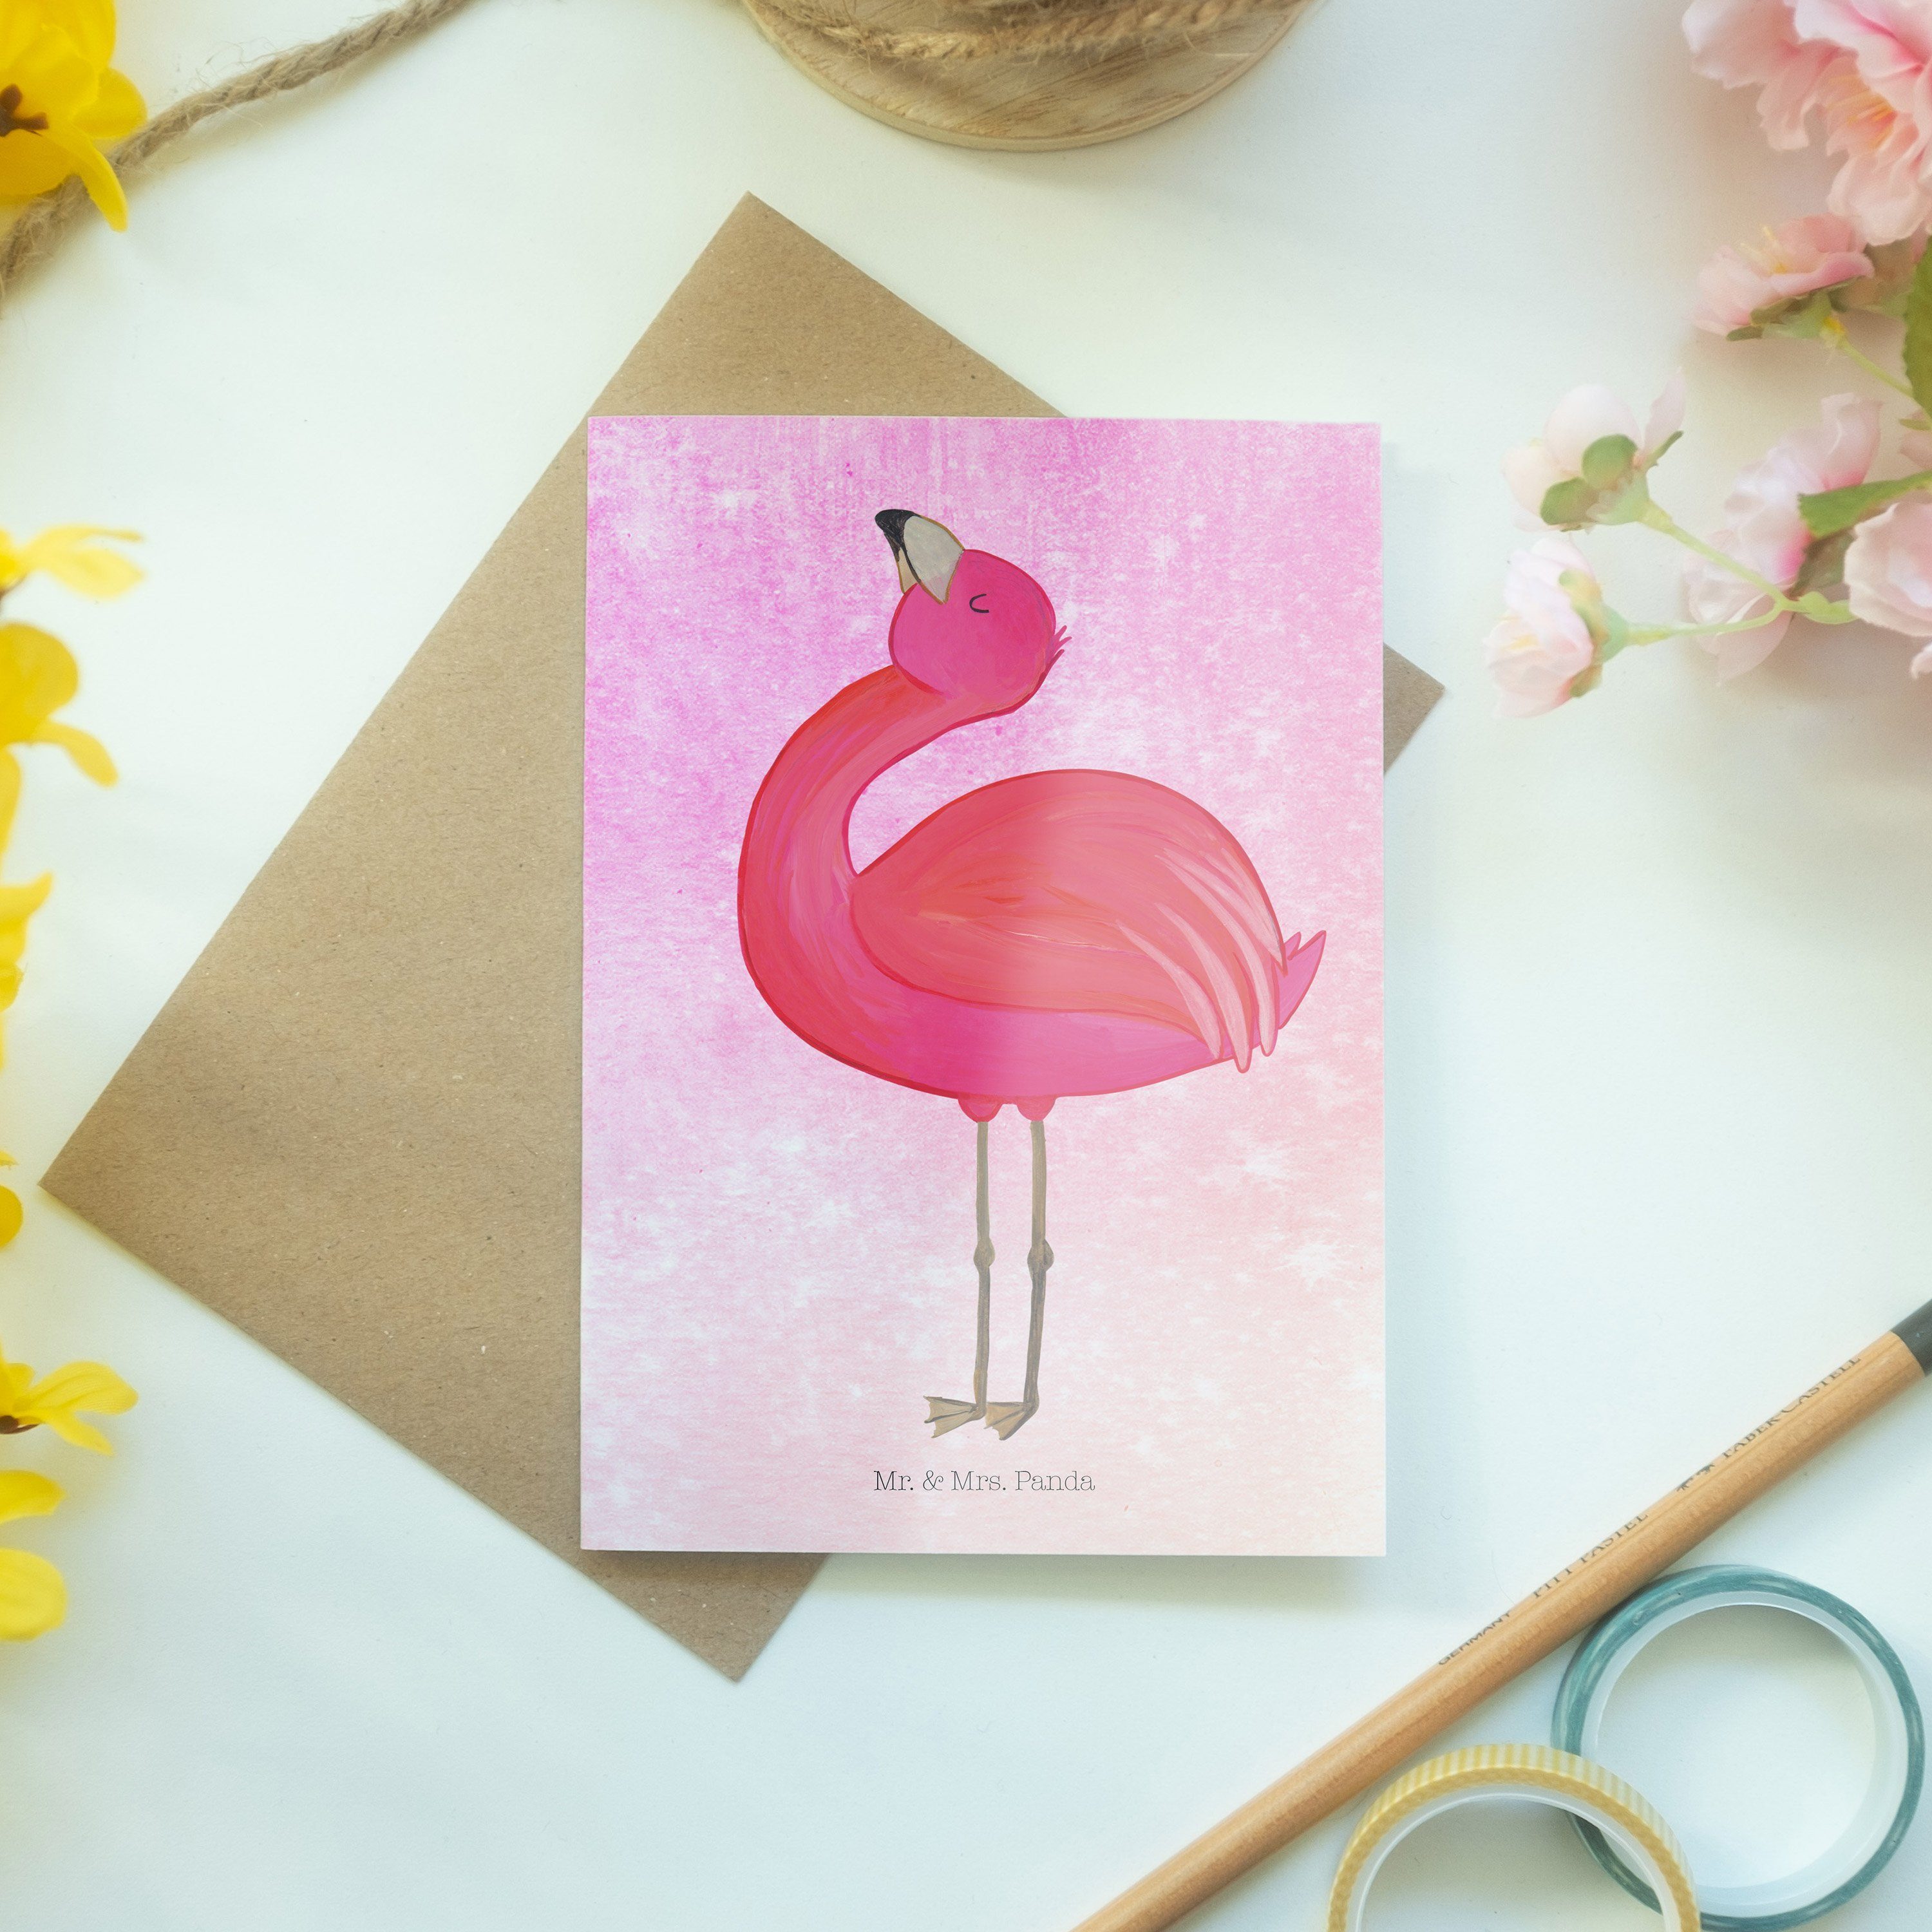 & Geschenk, Pink Panda - Mr. Mrs. Selbstl Grußkarte - Karte, stolz Aquarell Klappkarte, Flamingo